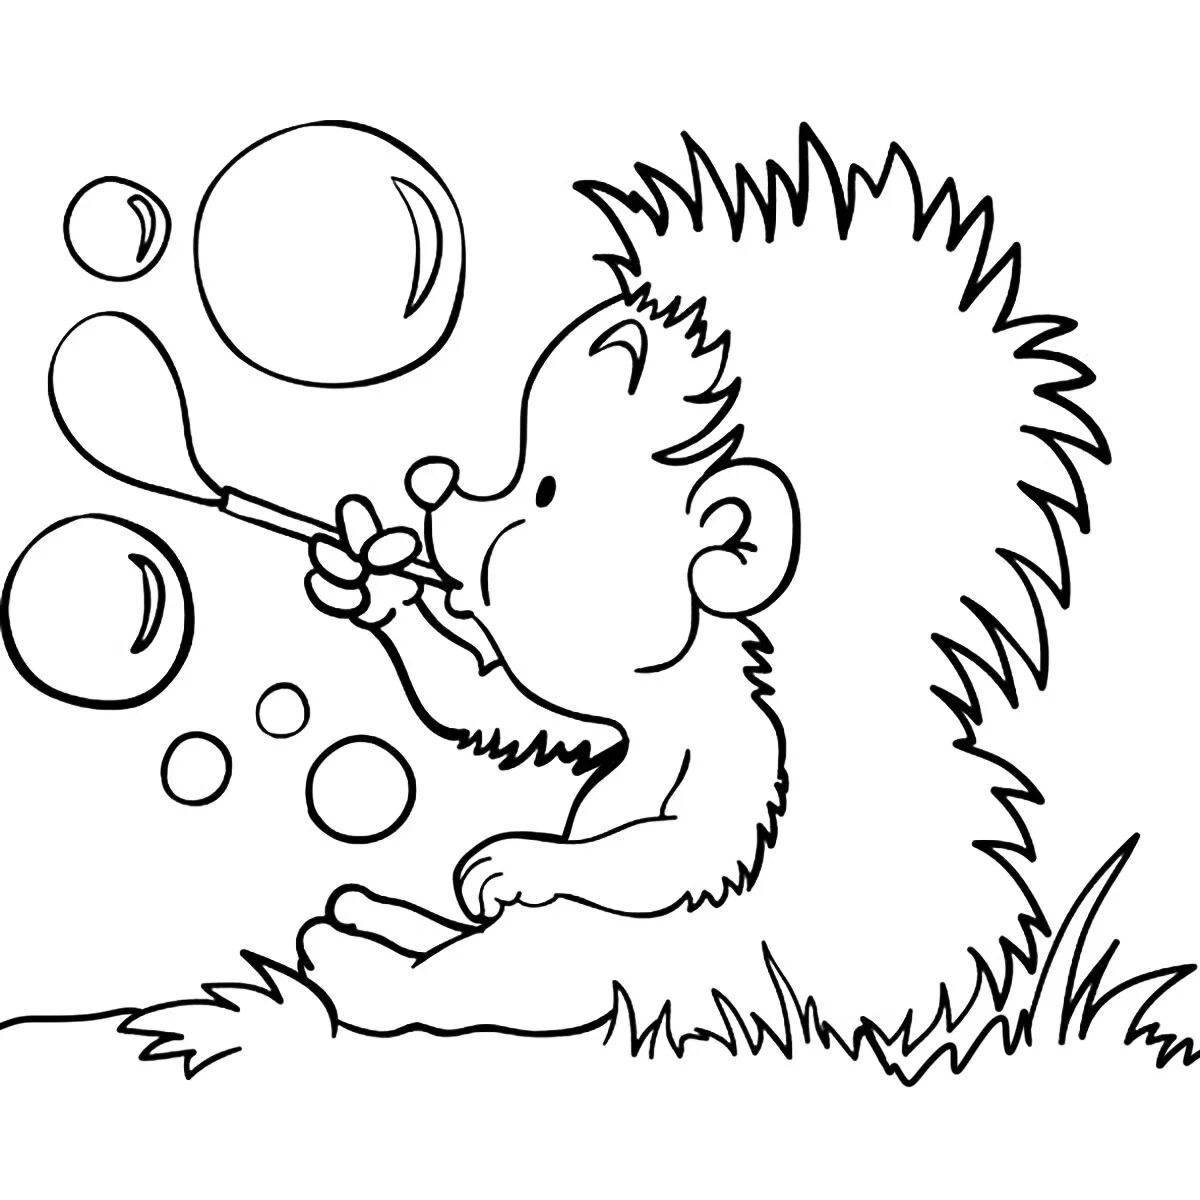 Magic hedgehog drawing for kids